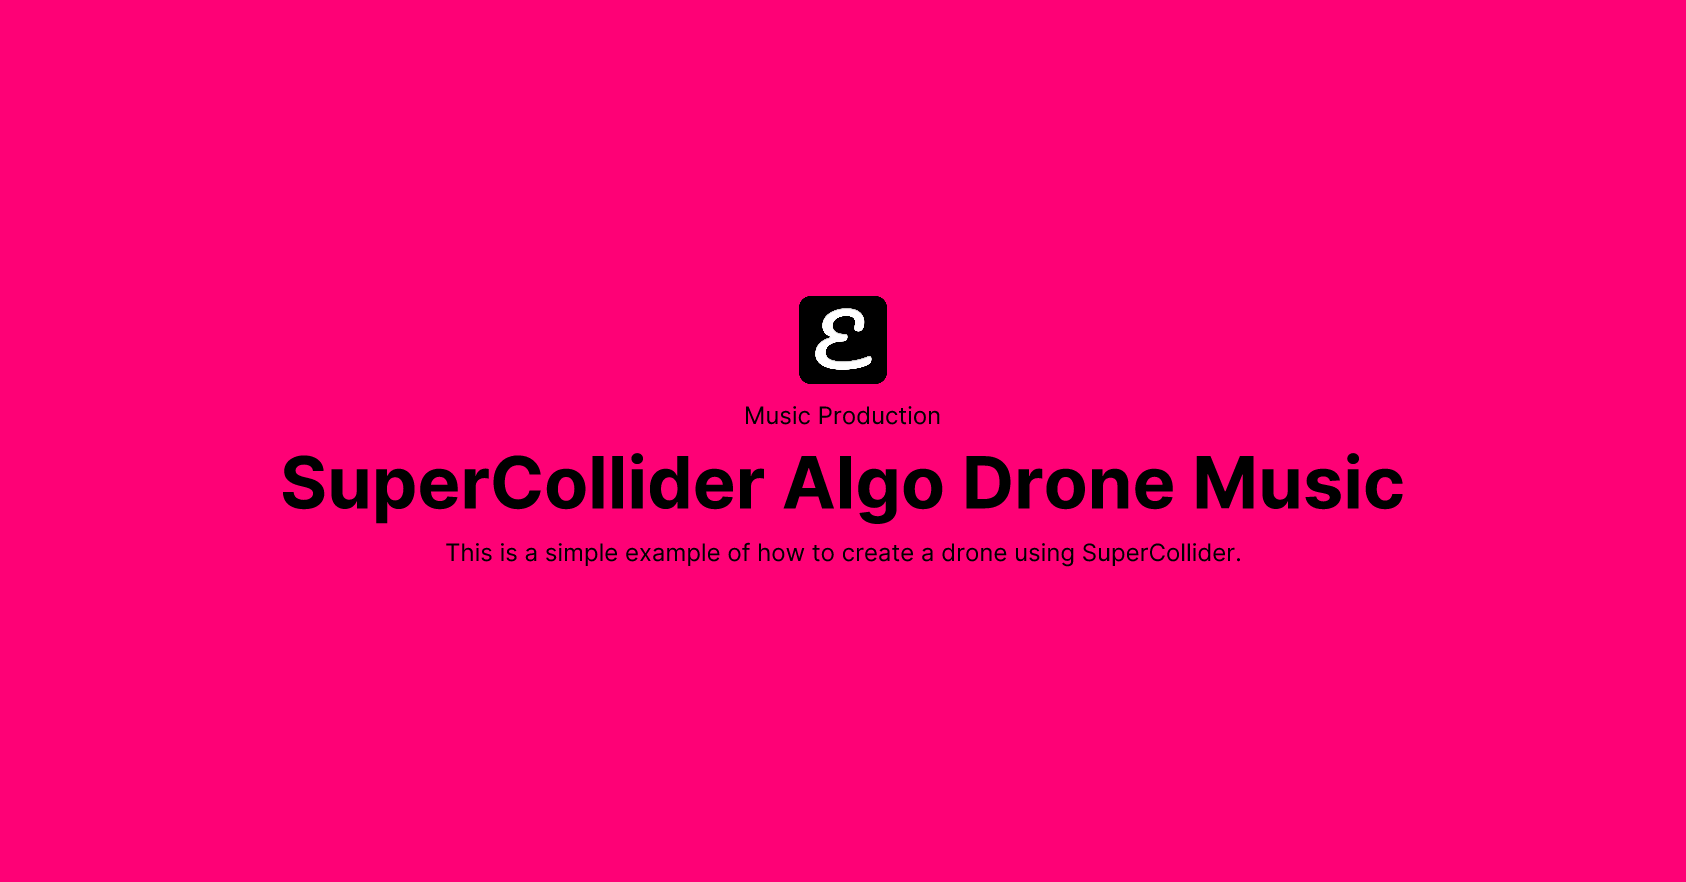 SuperCollider Algo Drone Music by Eric David Smith